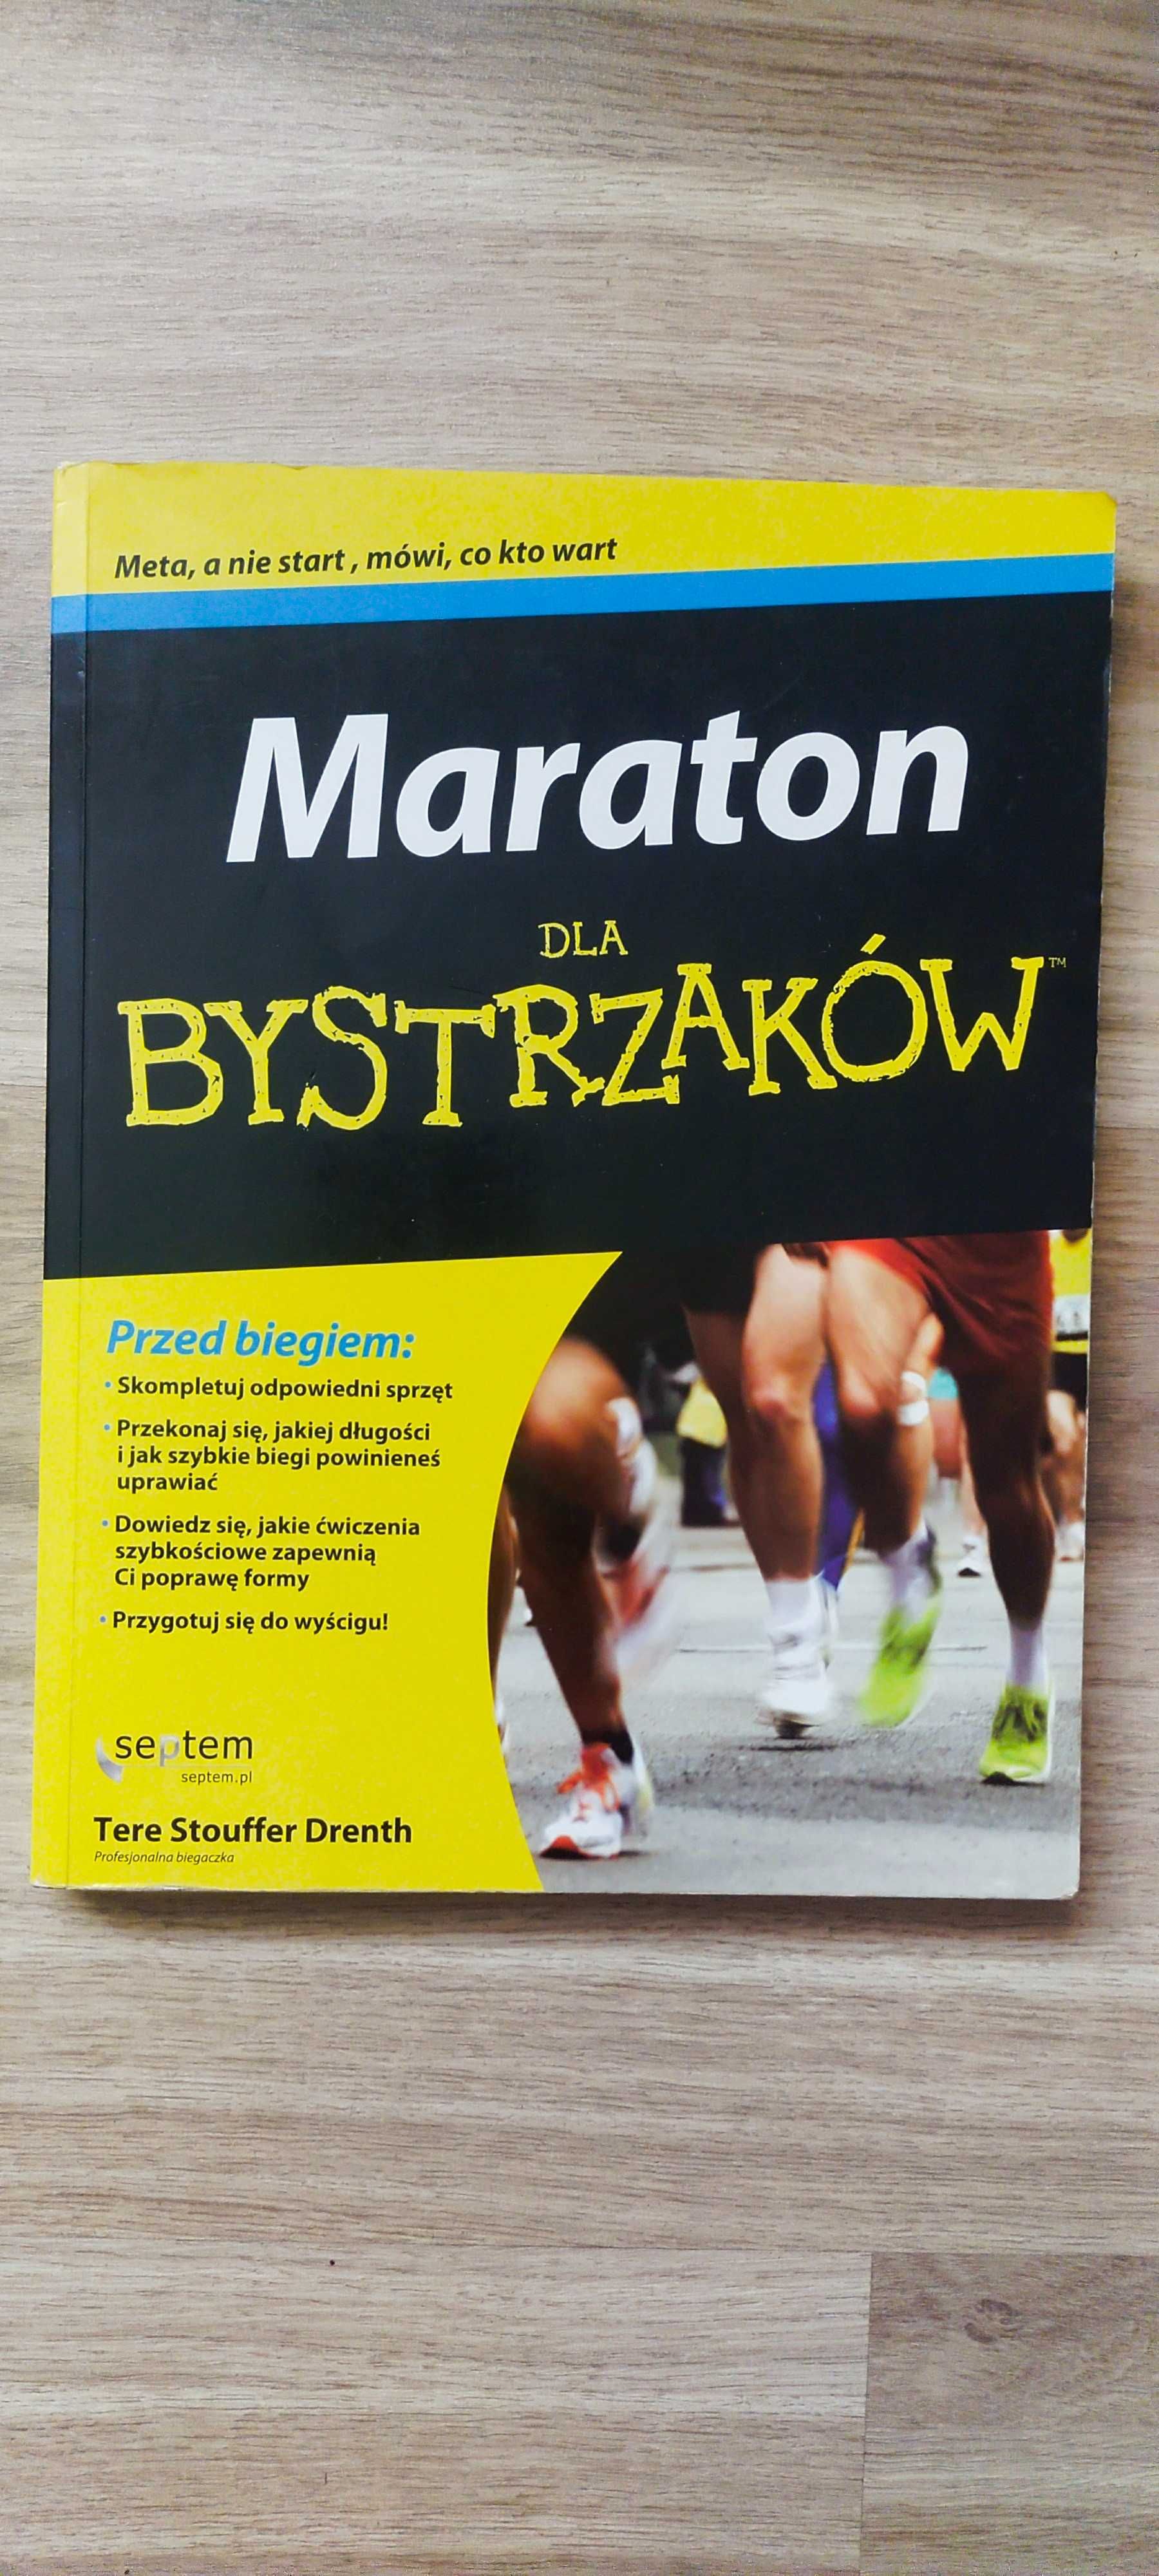 Maraton dla bystrzaków

Tere Stouffer Drenth